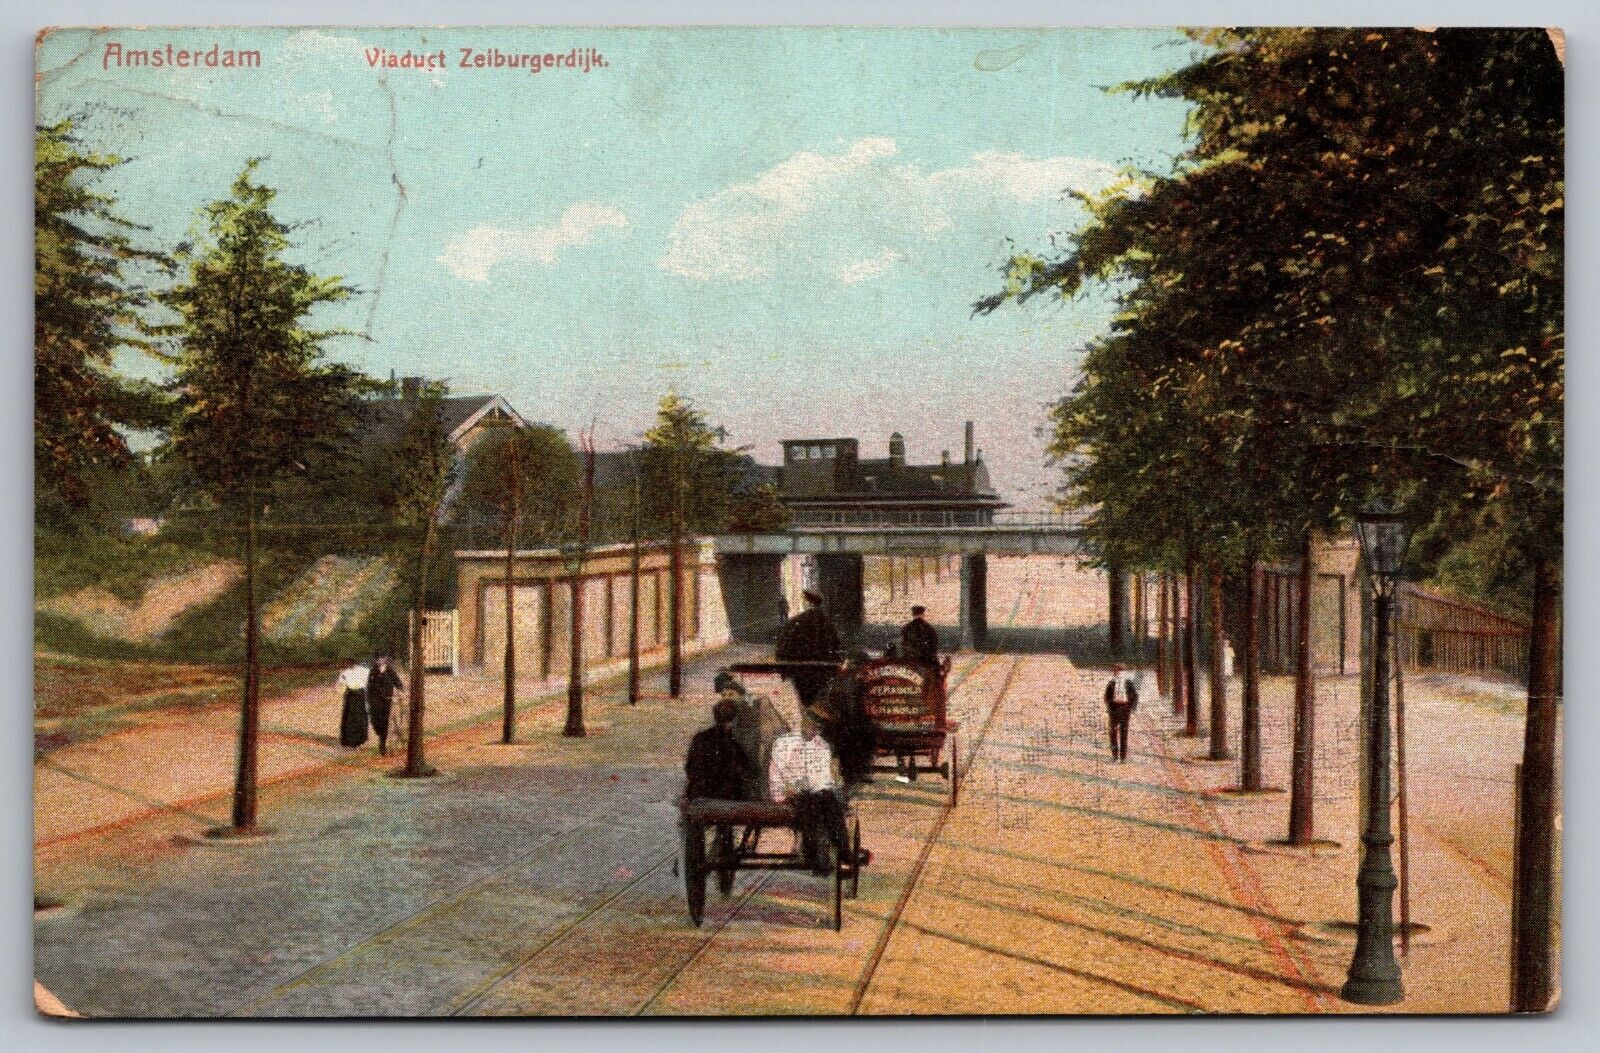 Viaduct Zeiburgerdijk Amsterdam Holland — Antique Postcard (Rare)